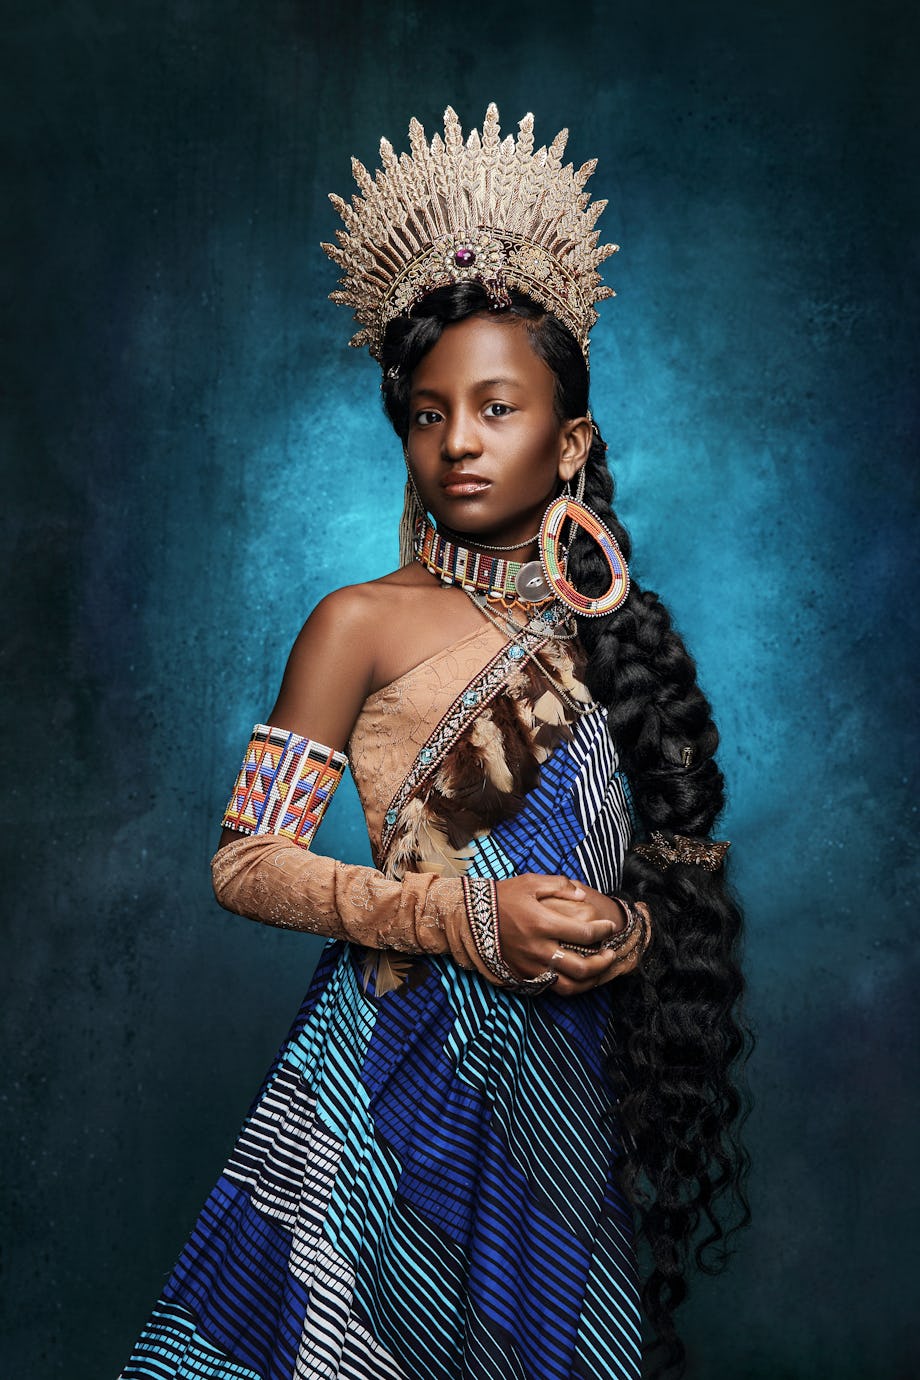 Stunning African American Princess Photo Series Celebrates Black Girl Magic 